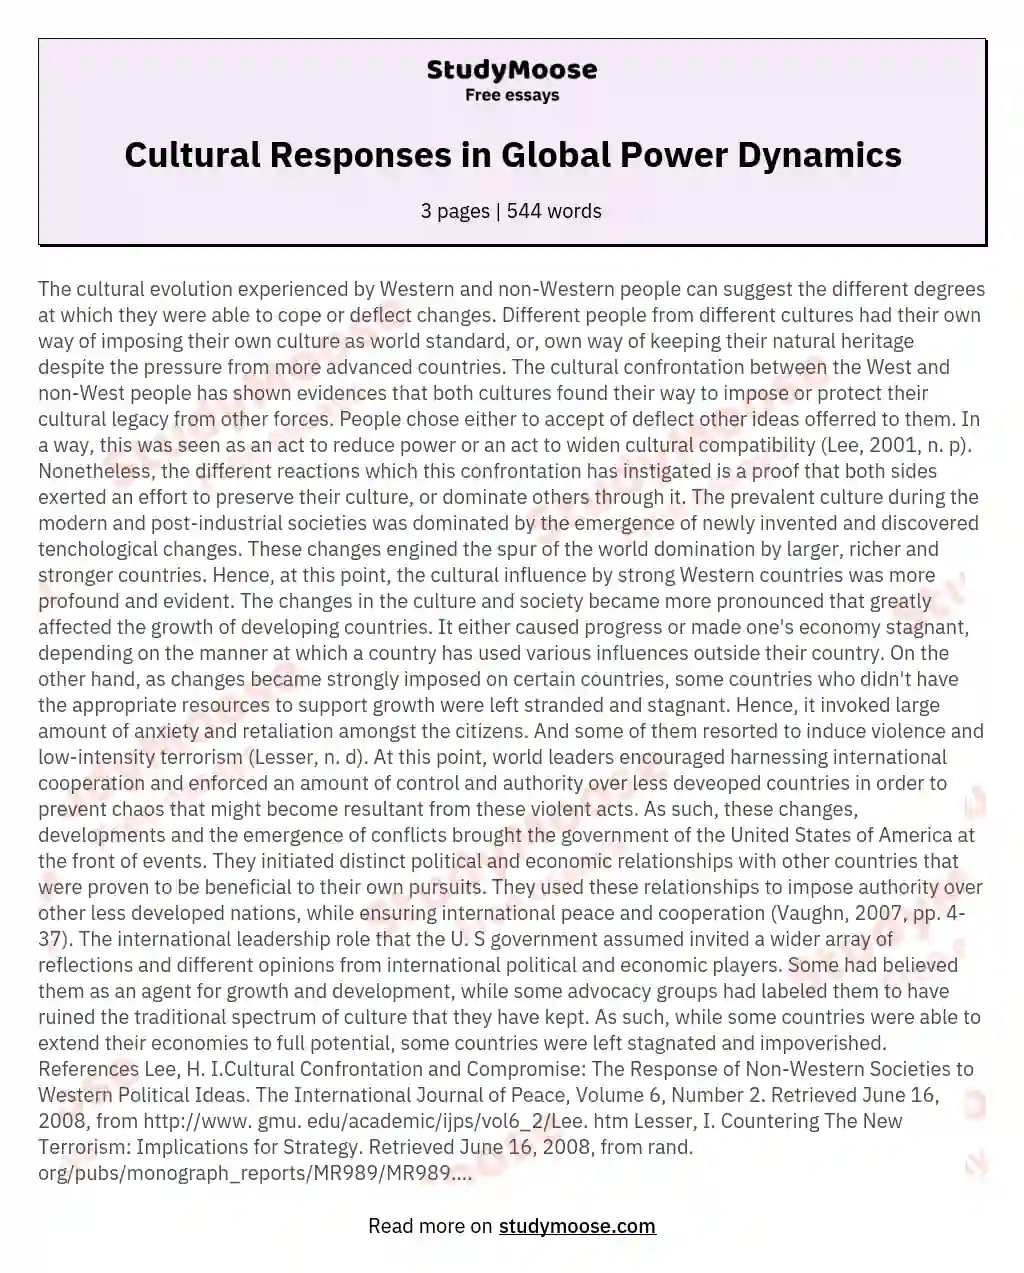 Cultural Responses in Global Power Dynamics essay